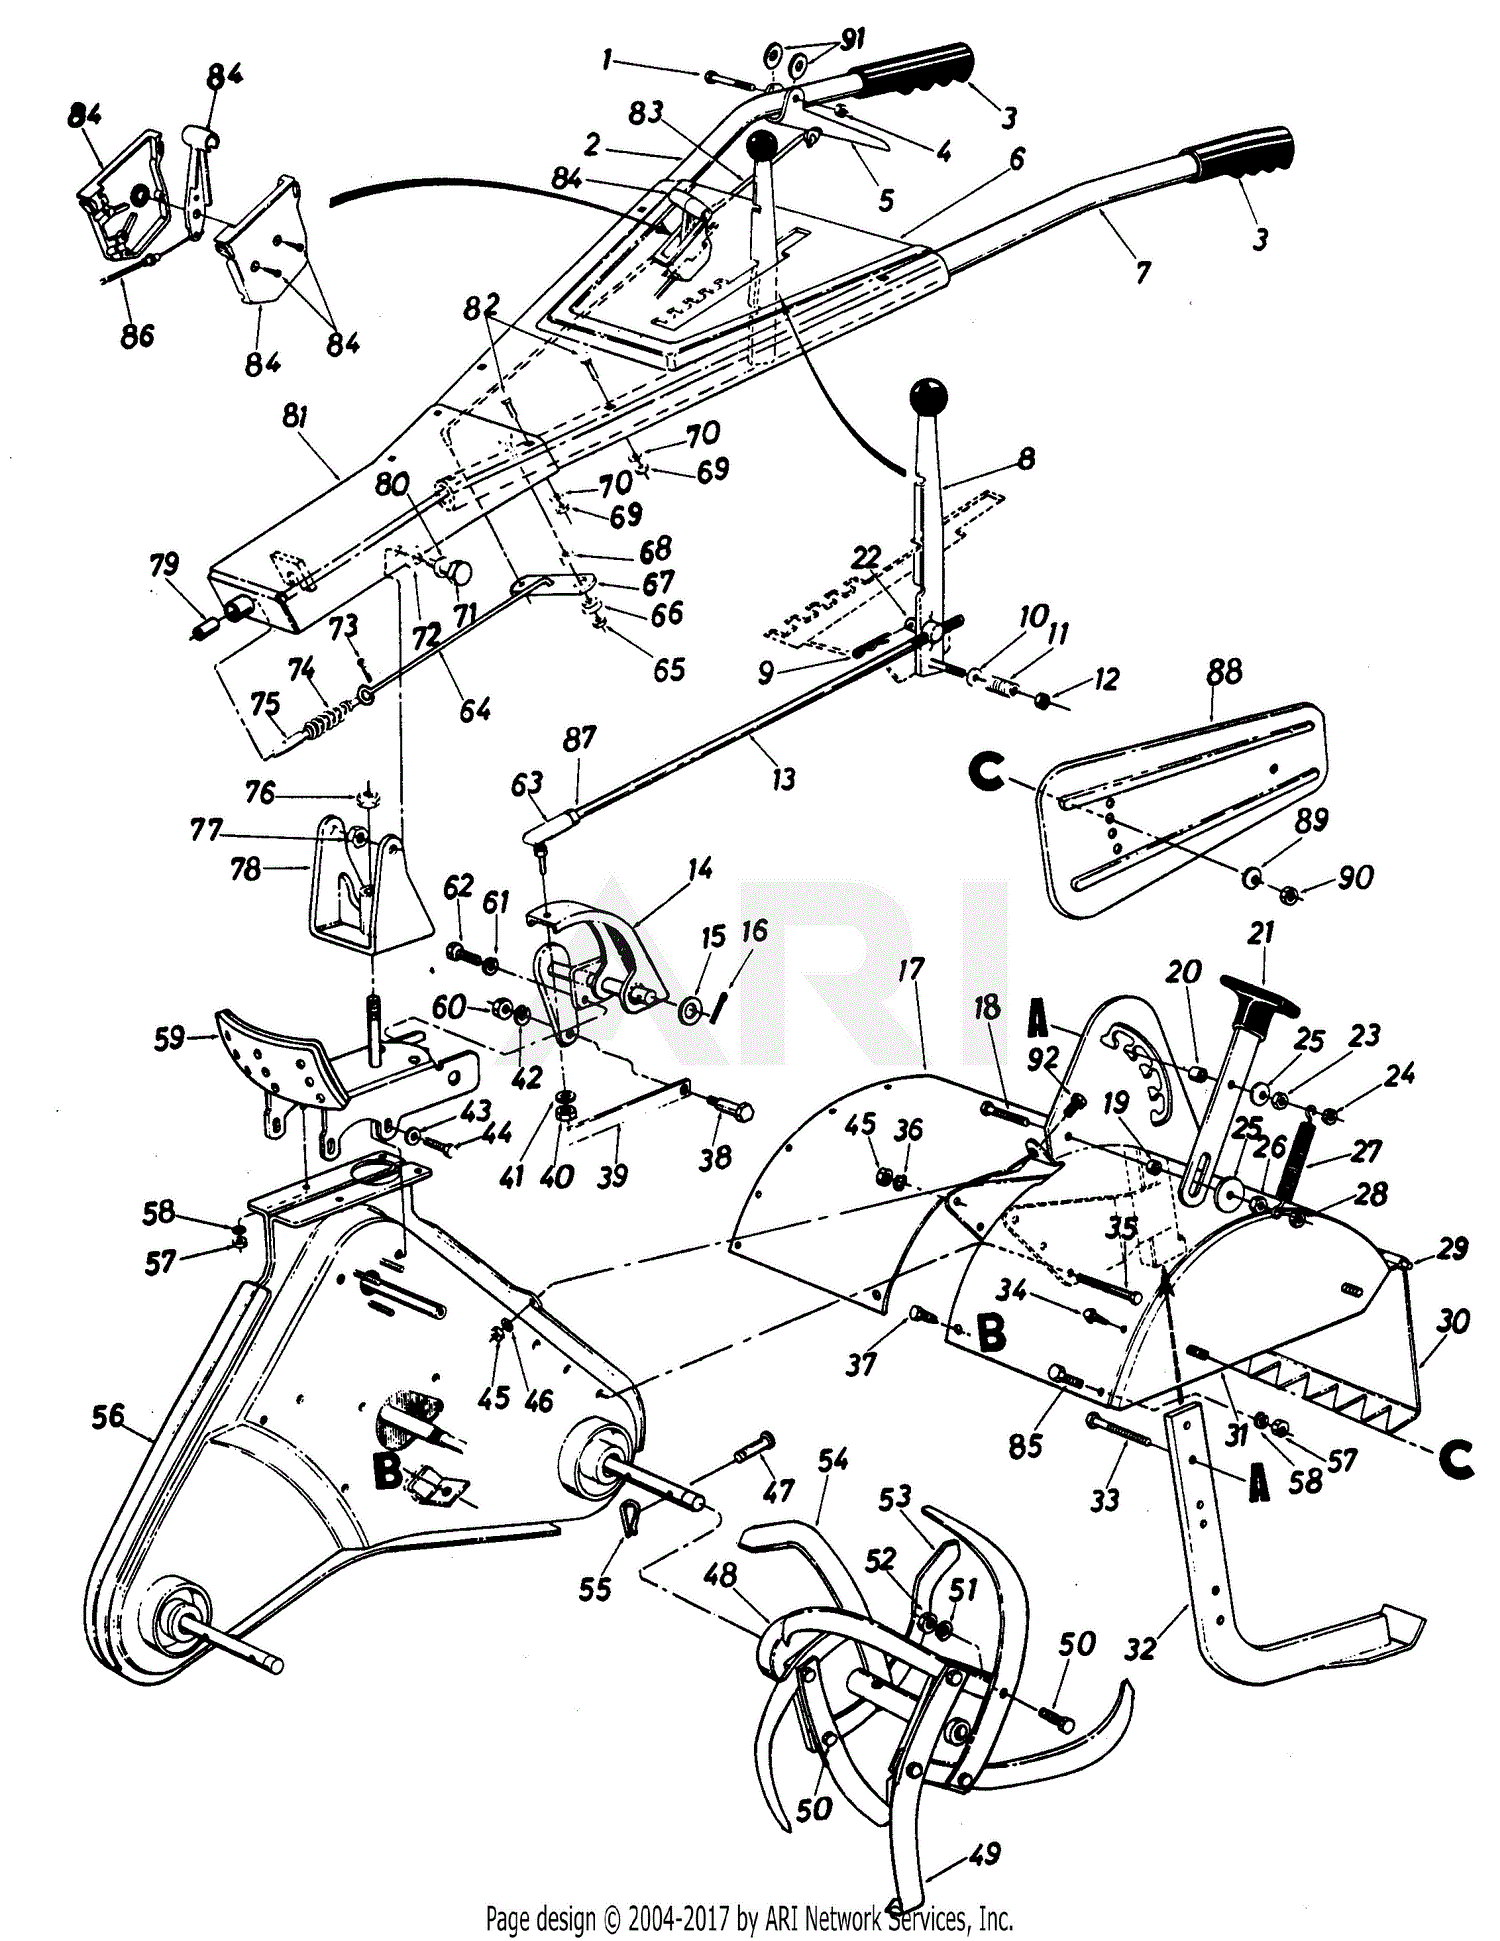 MTD 215-418-190 8 HP Rear Tine Tiller RB-850 (1985) Parts ... mtd tiller engine diagram 